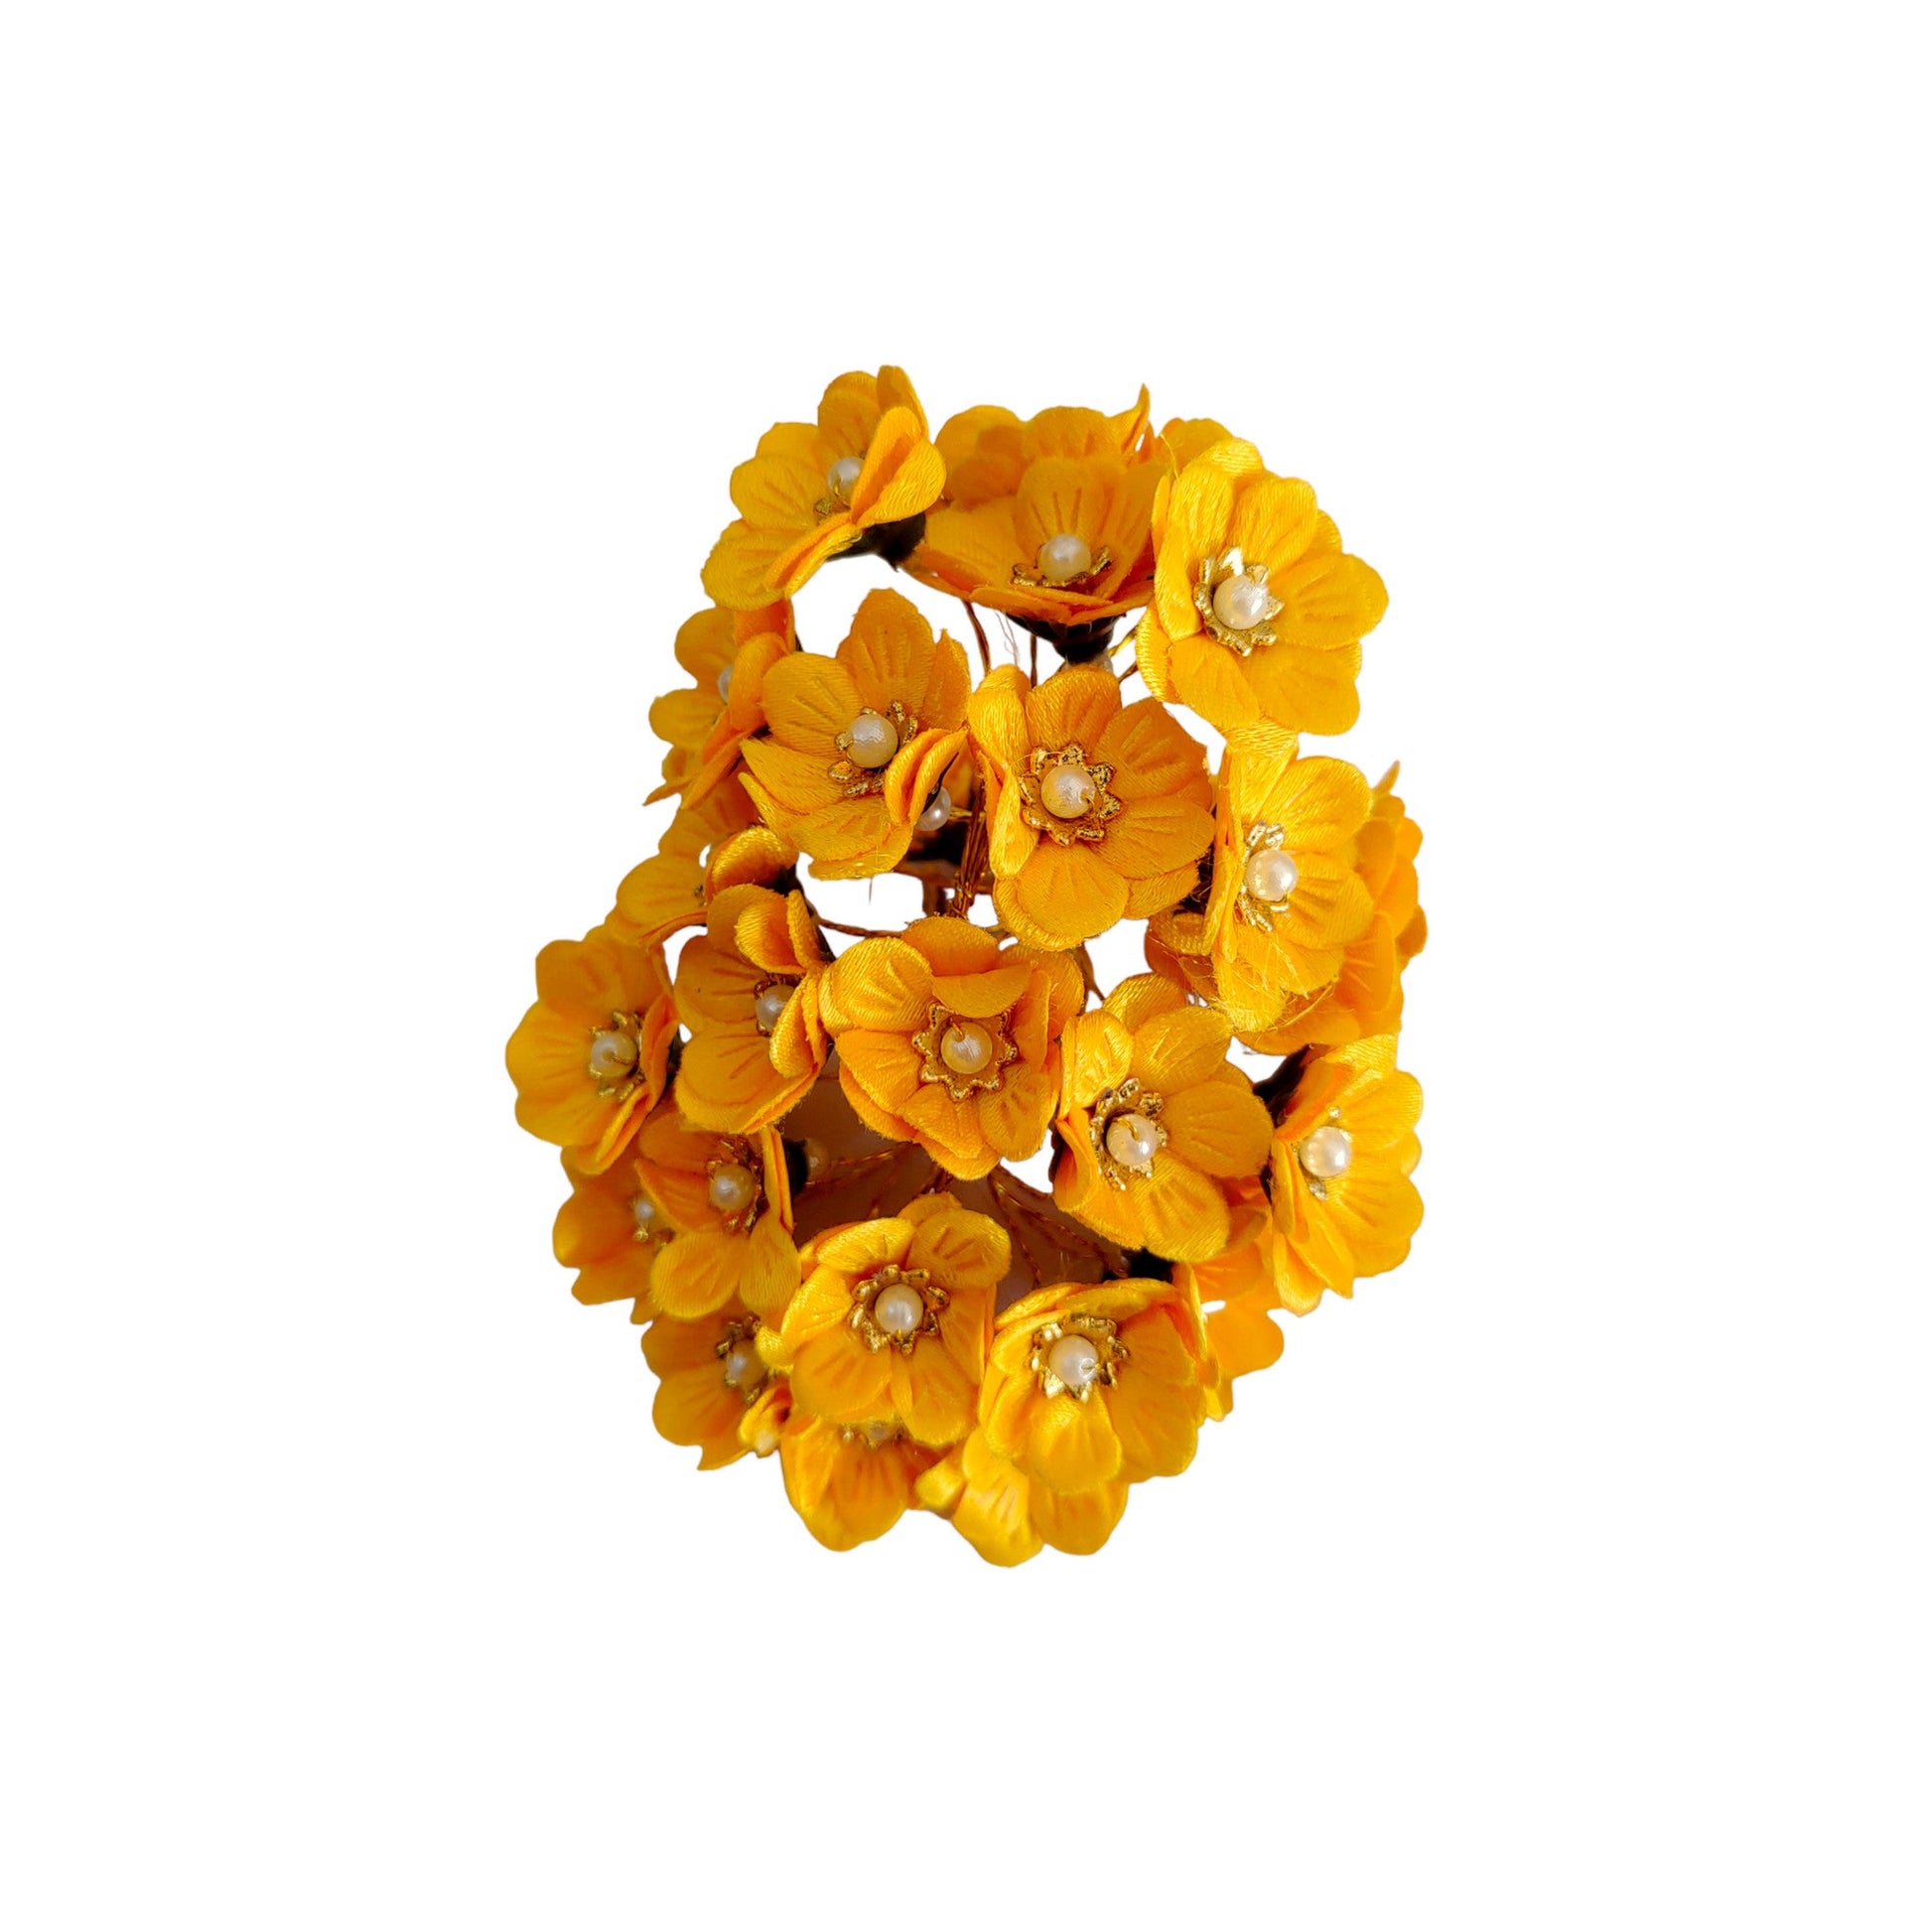 Decorative Artificial Primrose Fabric Flower for Decor, Craft or Textile, 60Pcs -11134, Orange